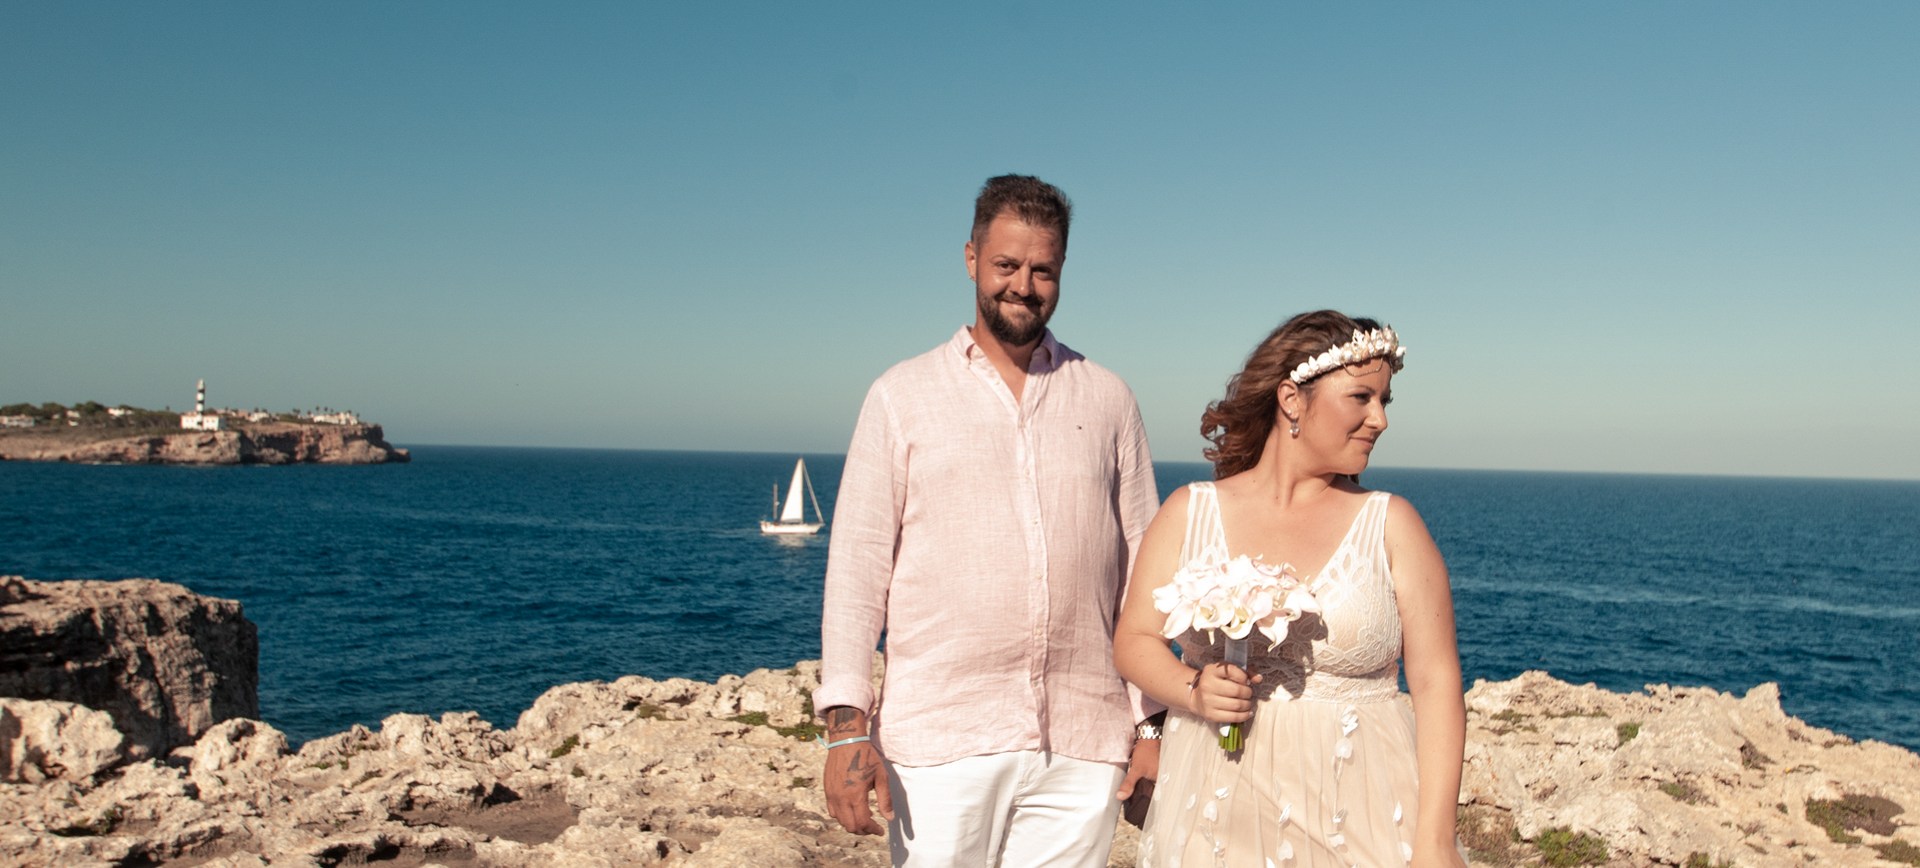 Portoclom Elopement in Mallorca - Bride & Groom at their beach wedding